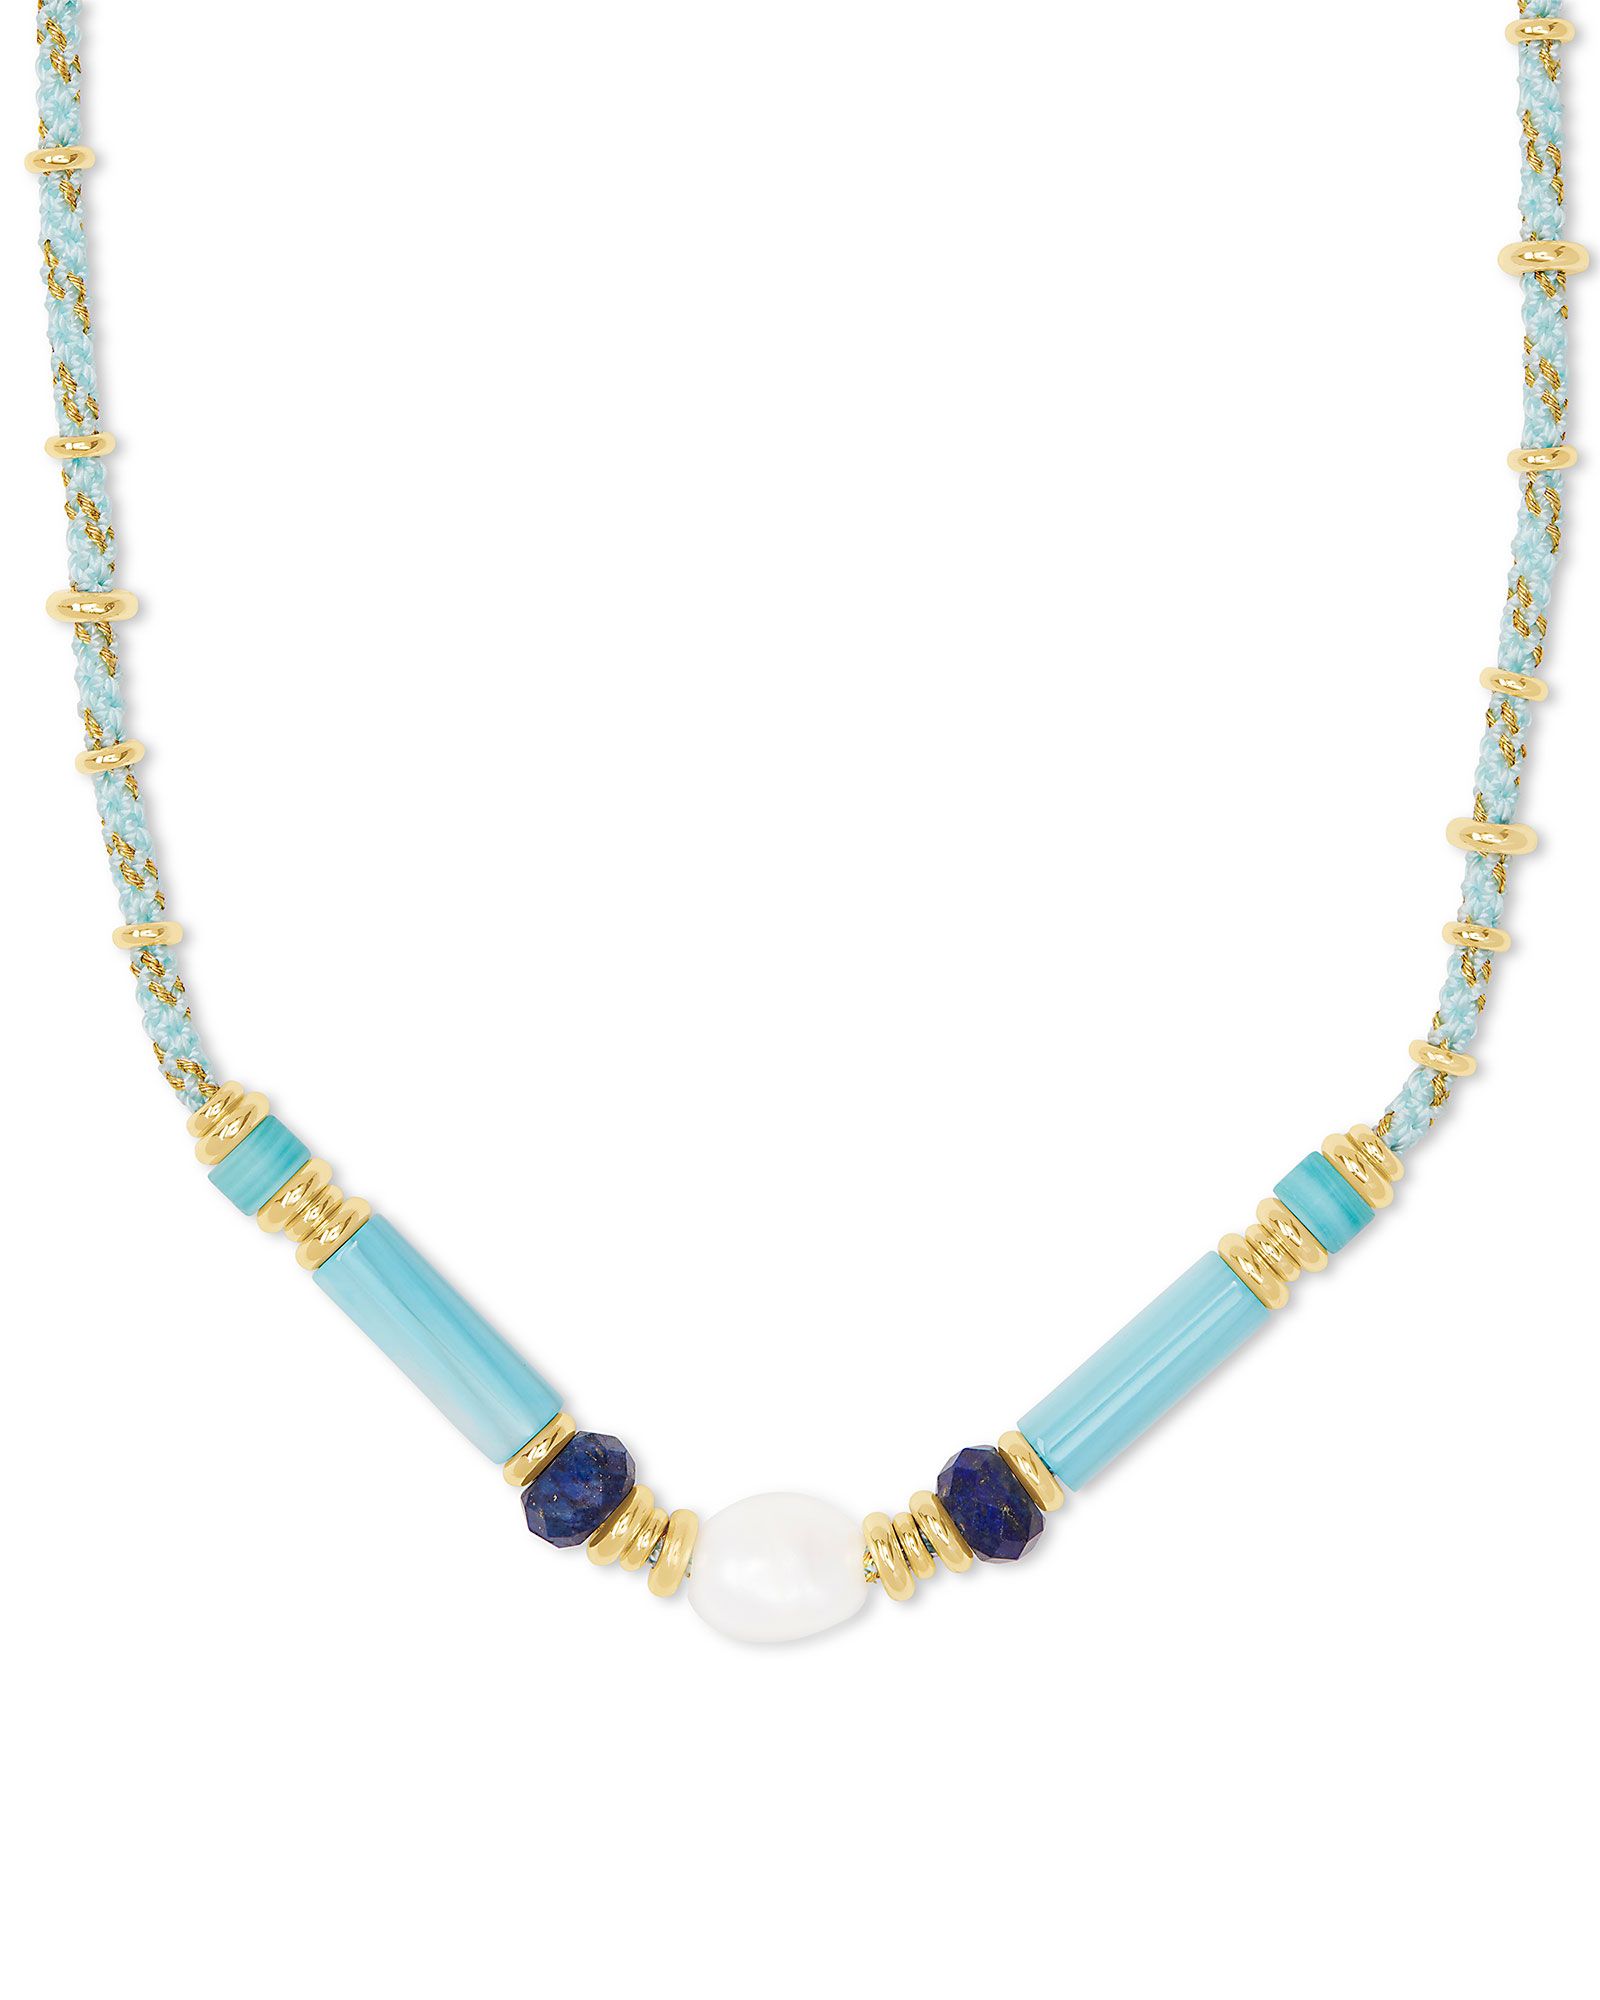 Rachel Gold Choker Necklace In Blue Mix | Kendra Scott